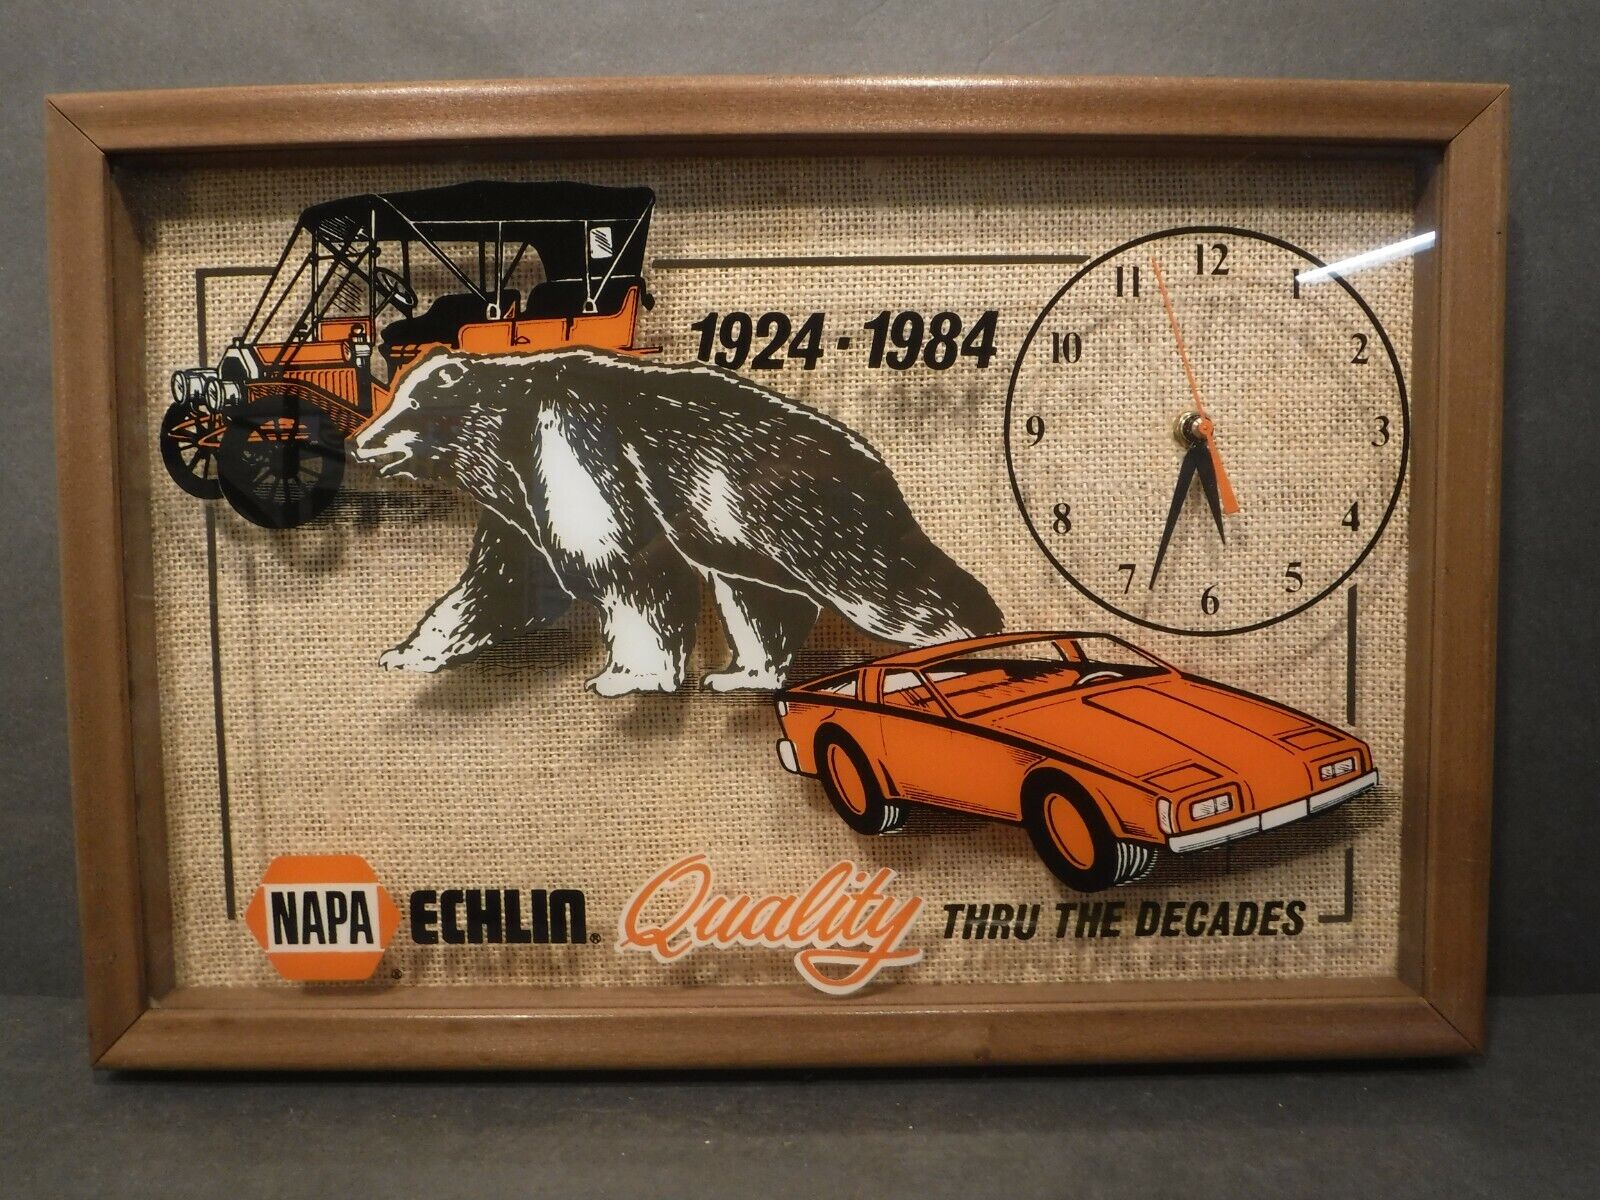 Vintage 1984 NAPA ECHLIN Quality Wall Clock 1924-1984 Thru The Decades NOS W/Box